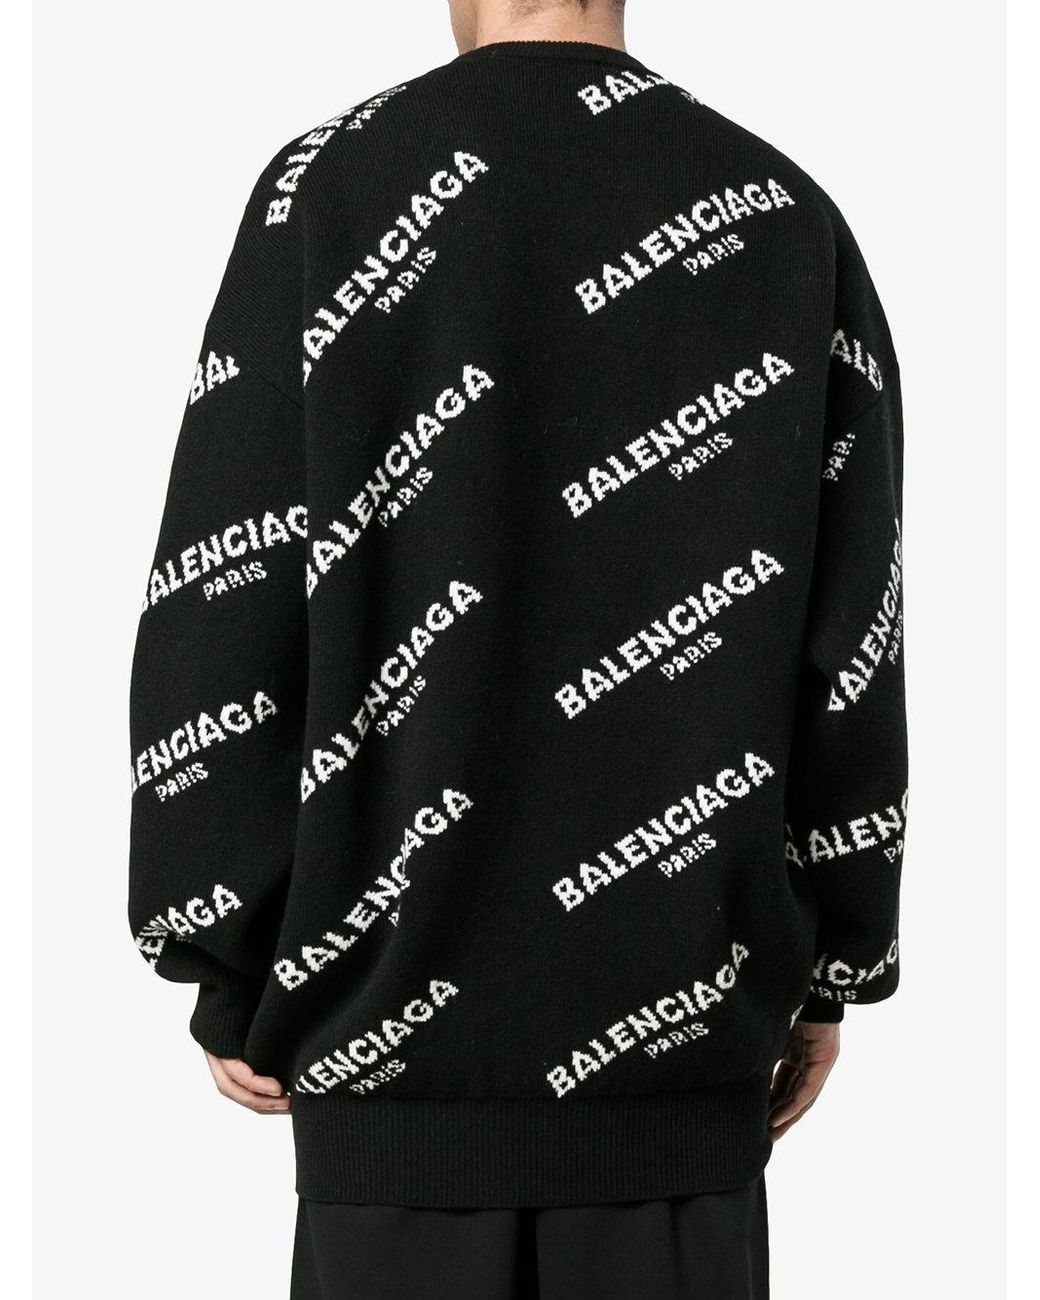 Balenciaga Oversized All-over Logo Sweatshirt in Black for Men | Lyst